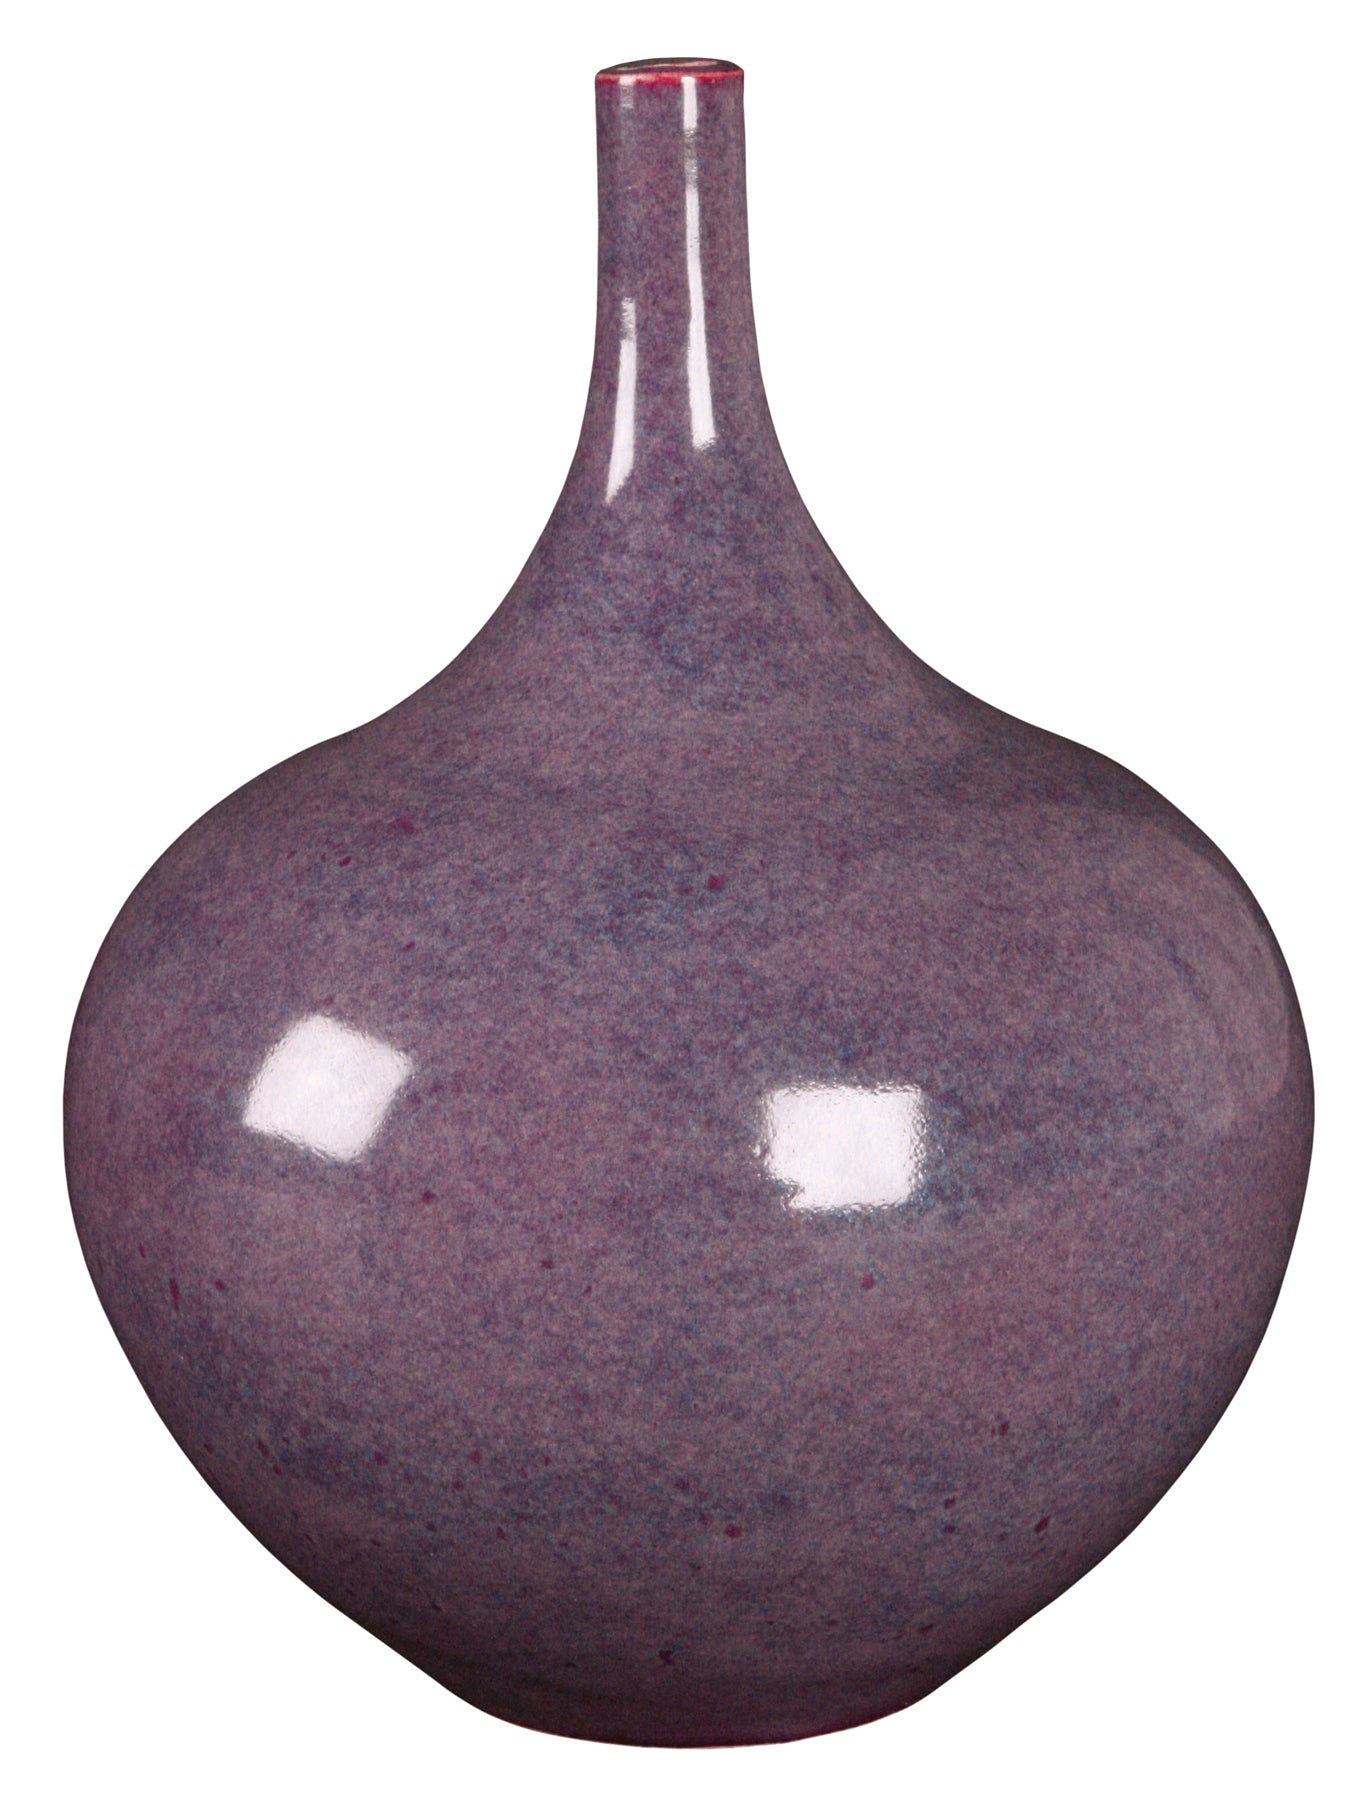 Amaco Potter's Choice Cone 6 Glazes On Sale - The Ceramic Shop